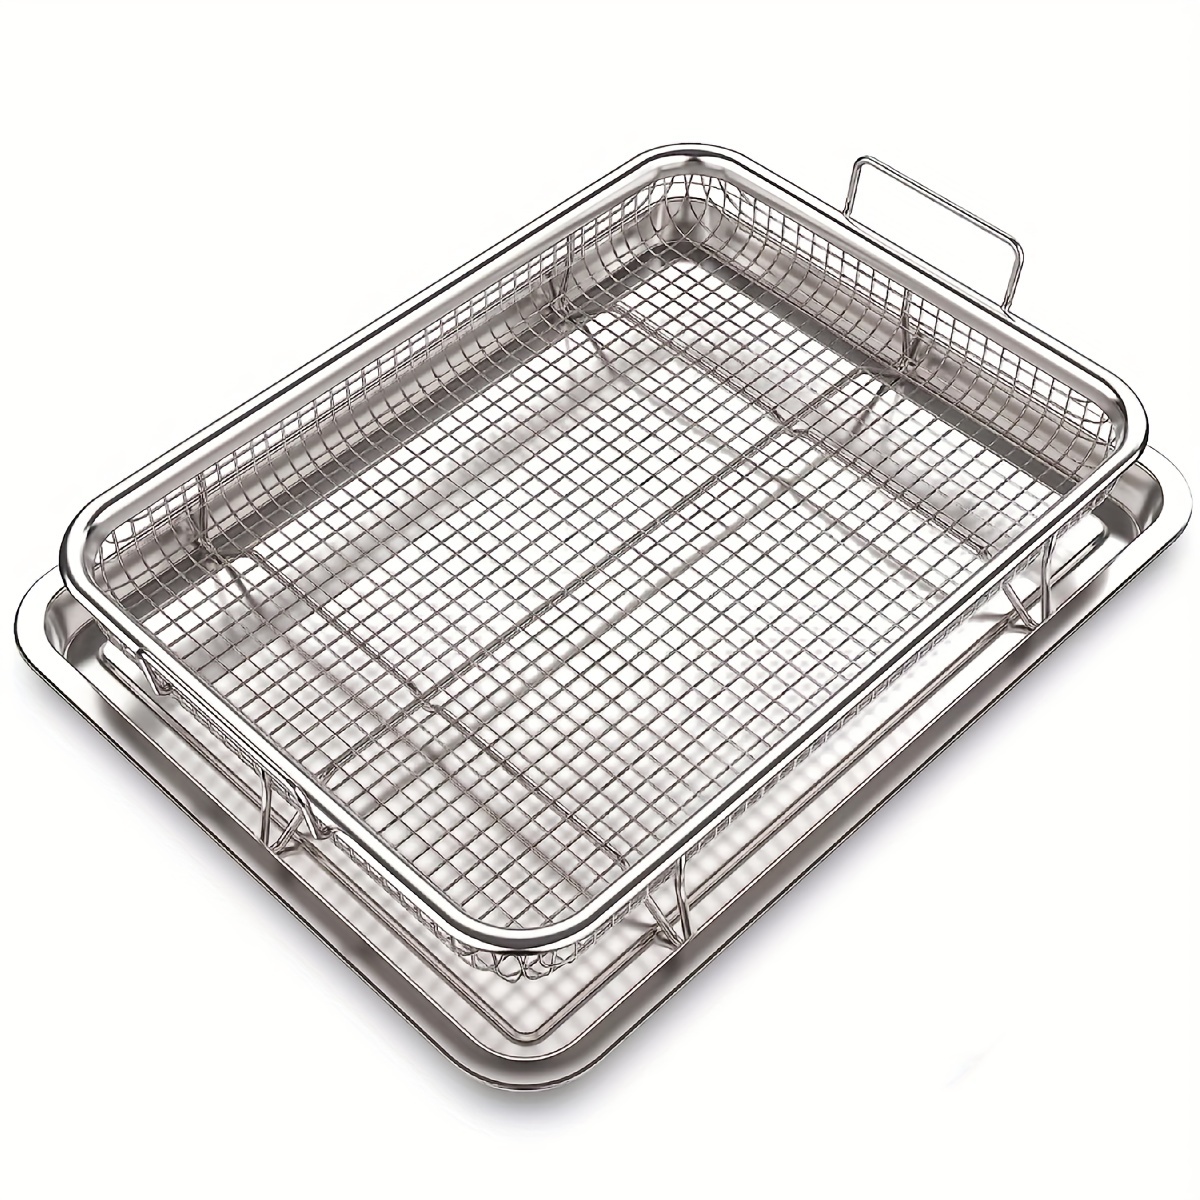 Air Fryer Basket Pan for Oven Stainless Steel Crisper Tray